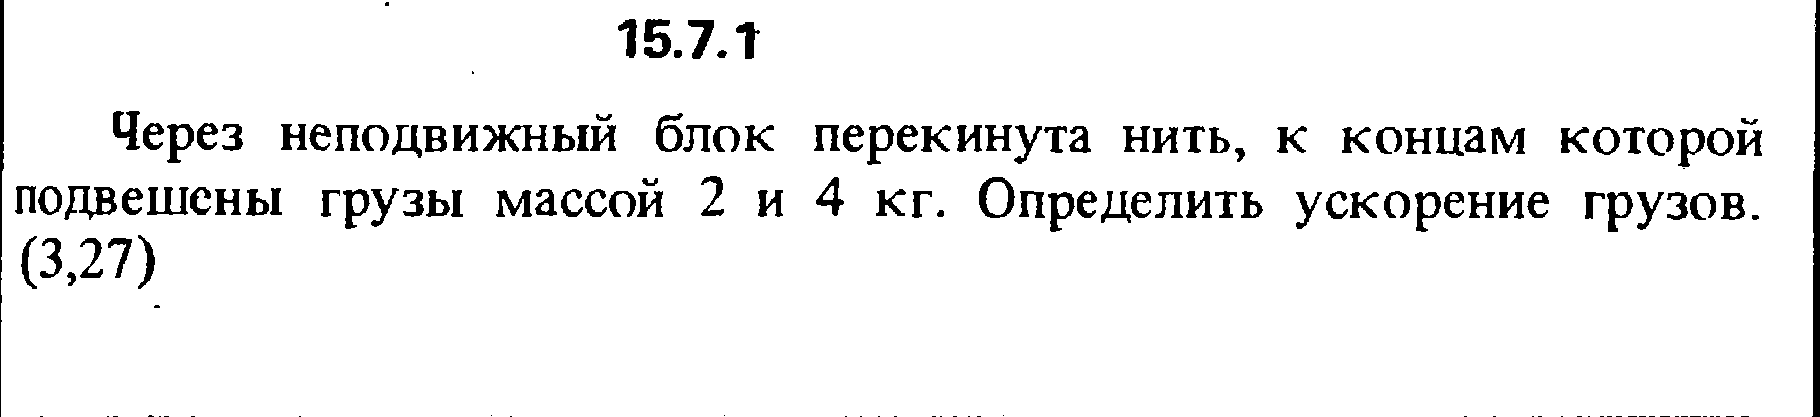 Решение задачи 15.7.1 из сборника Кепе О.Е. 1989 года